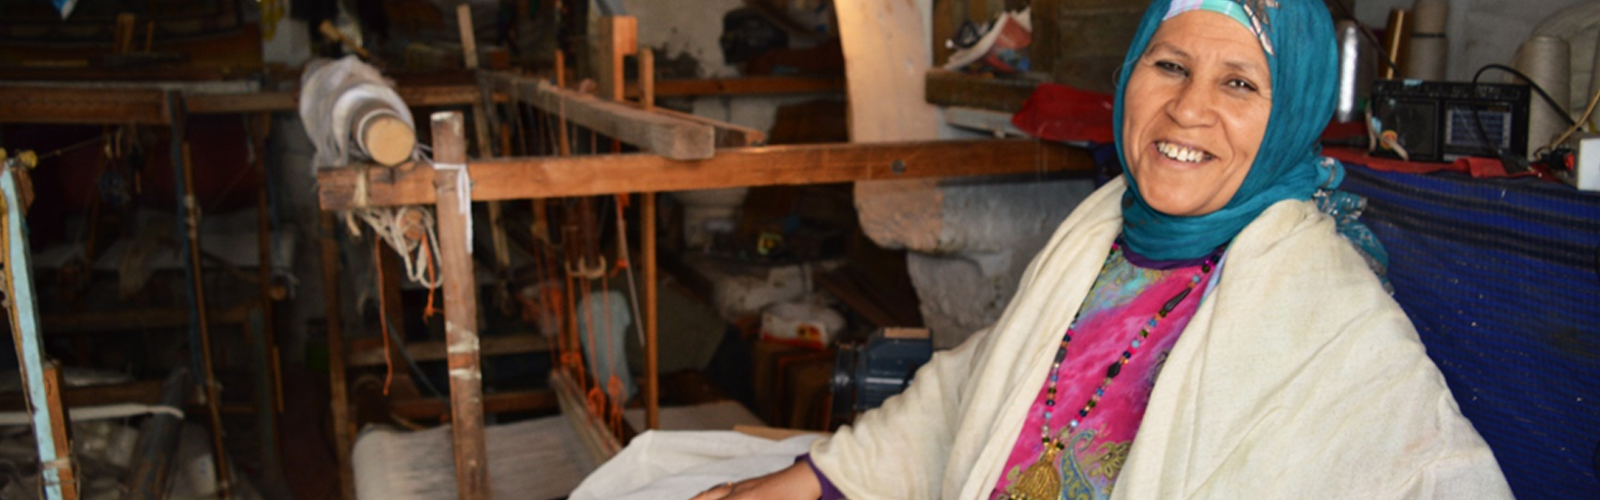 Taysir Microfinance support of artisanal weaving led by Habiba in Kairouan